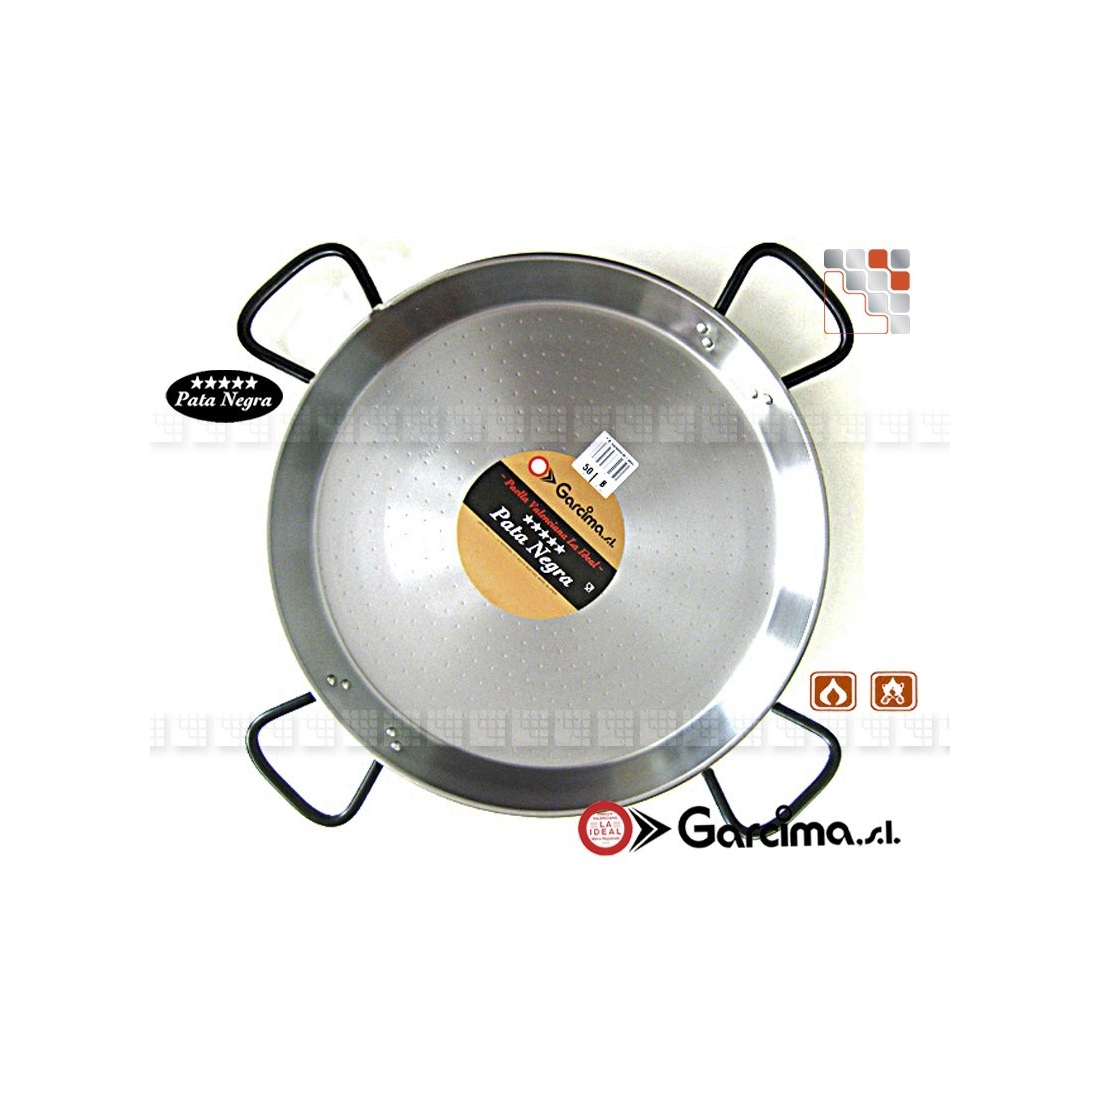 Paella dish D90 Polished PataNegra Garcima G05-85090 GARCIMA® LaIdeal Paella dish Polished PataNegra Garcima